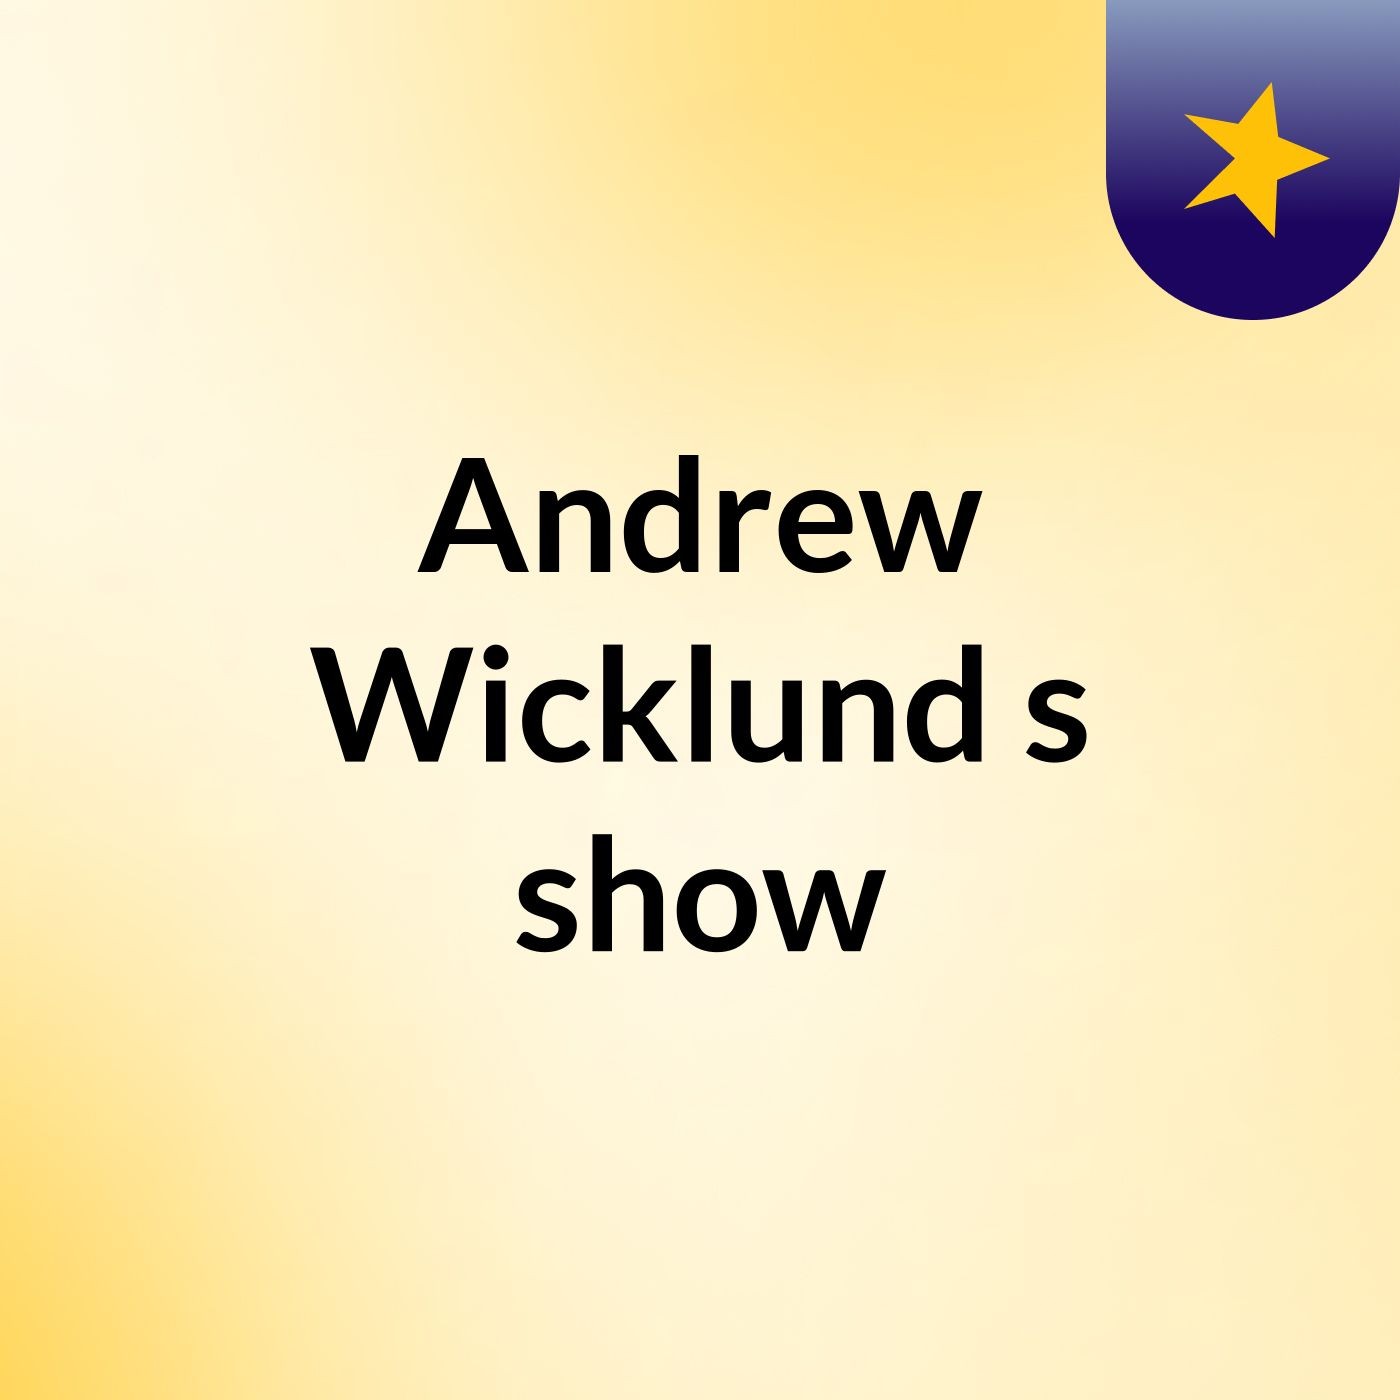 Andrew Wicklund's show